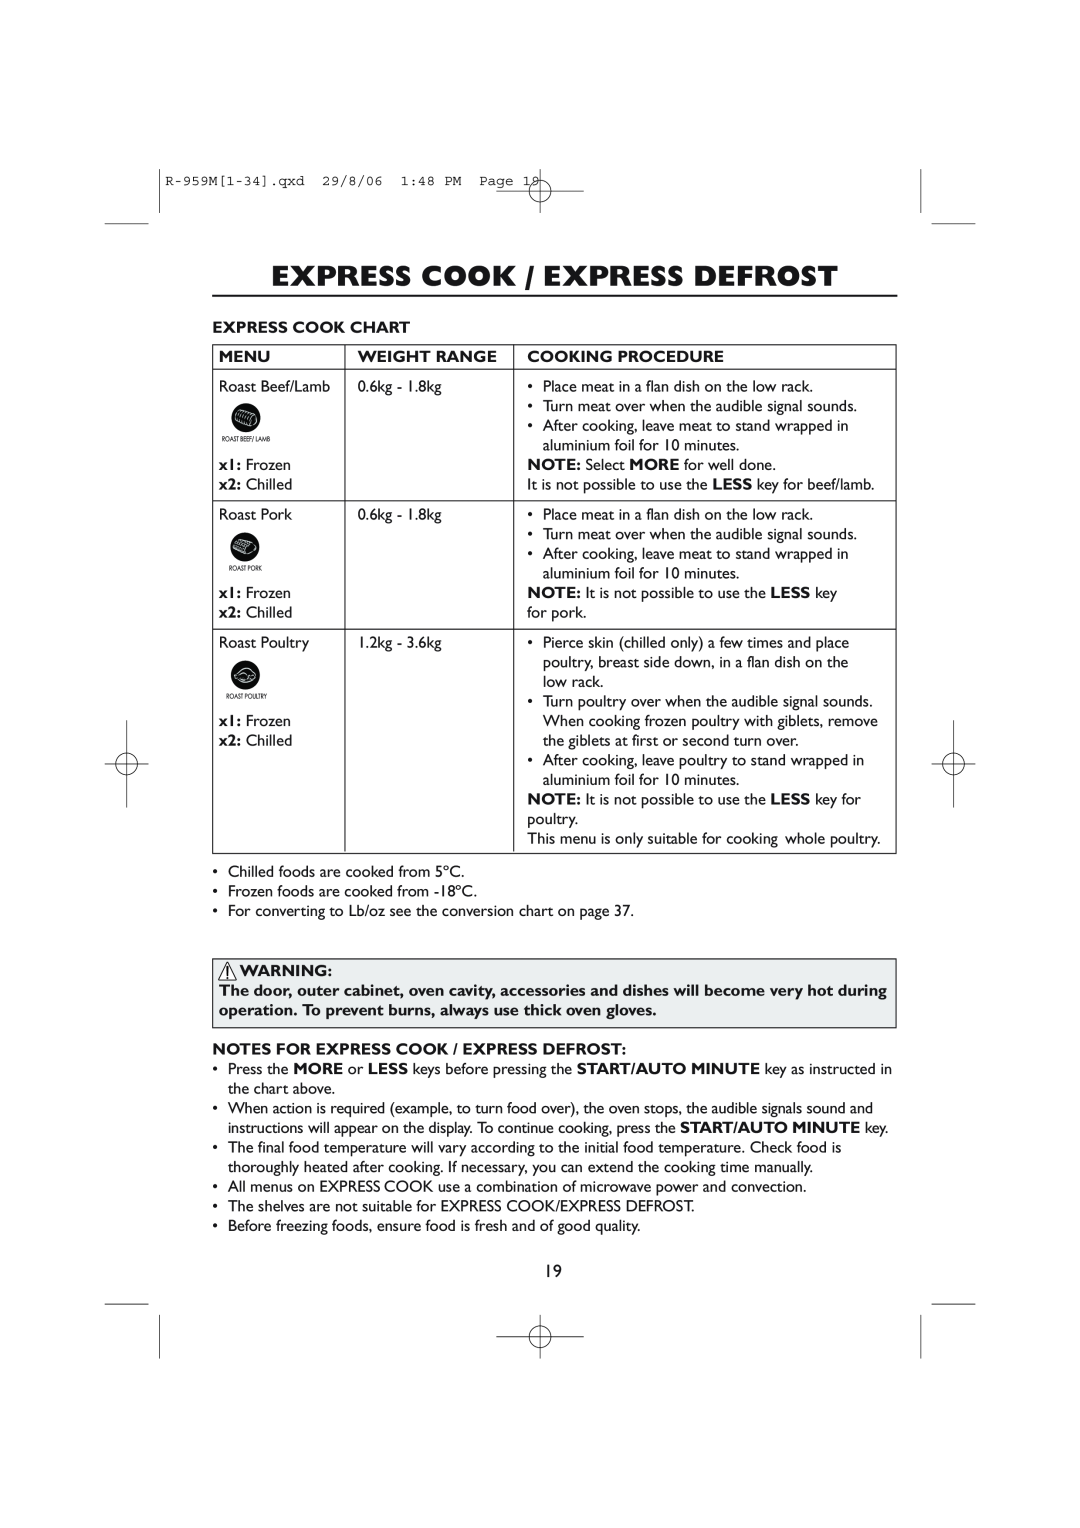 Sharp R-959M Express Cook Chart, Menu, Weight Range, Cooking Procedure, Notes For Express Cook / Express Defrost 